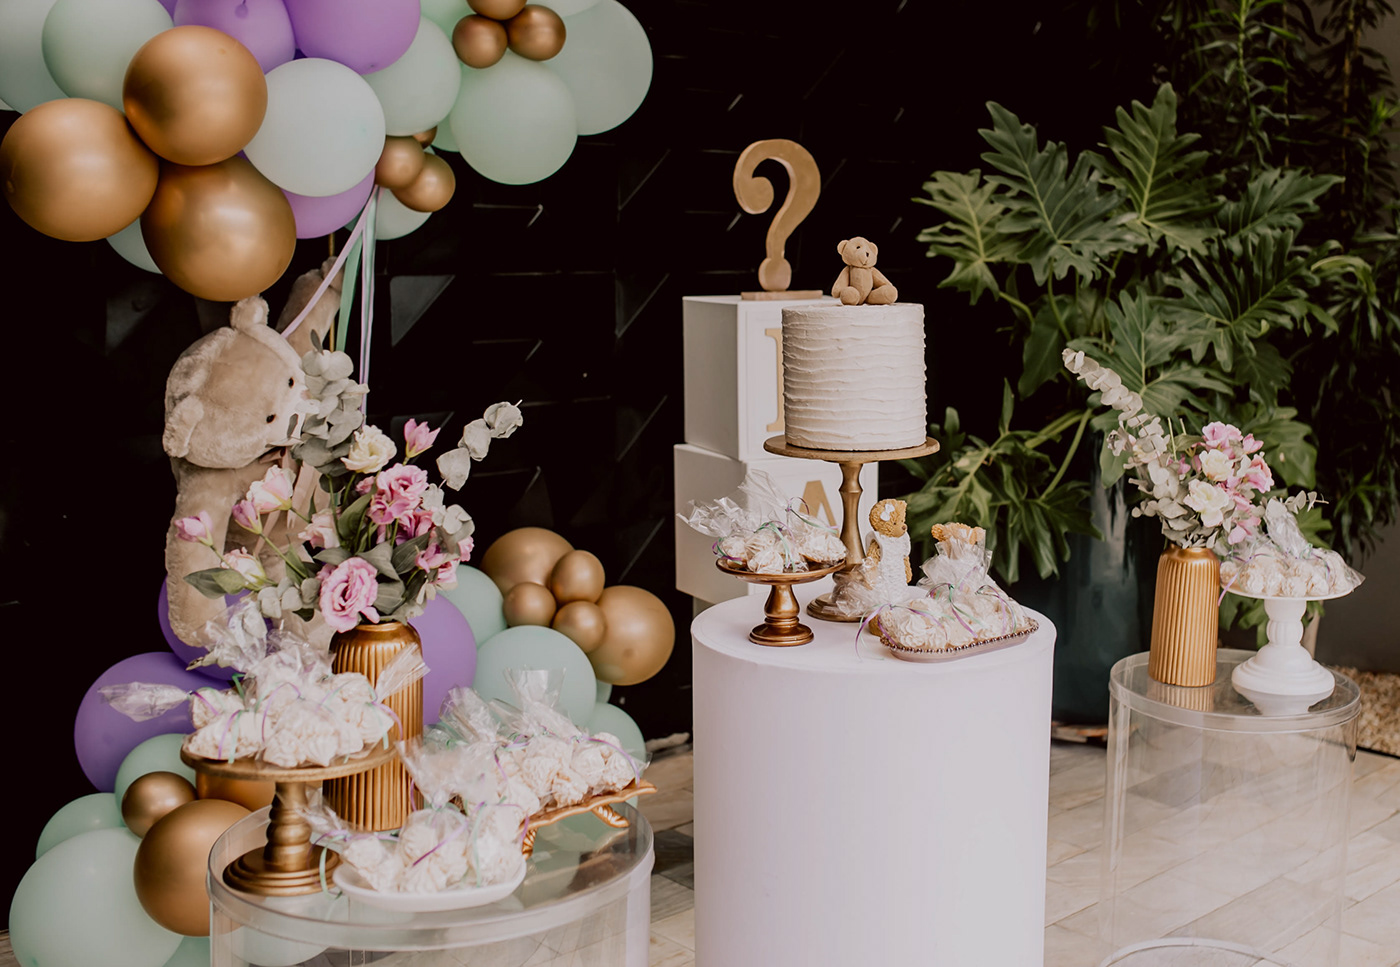 Image may contain: birthday cake, vase and wedding cake